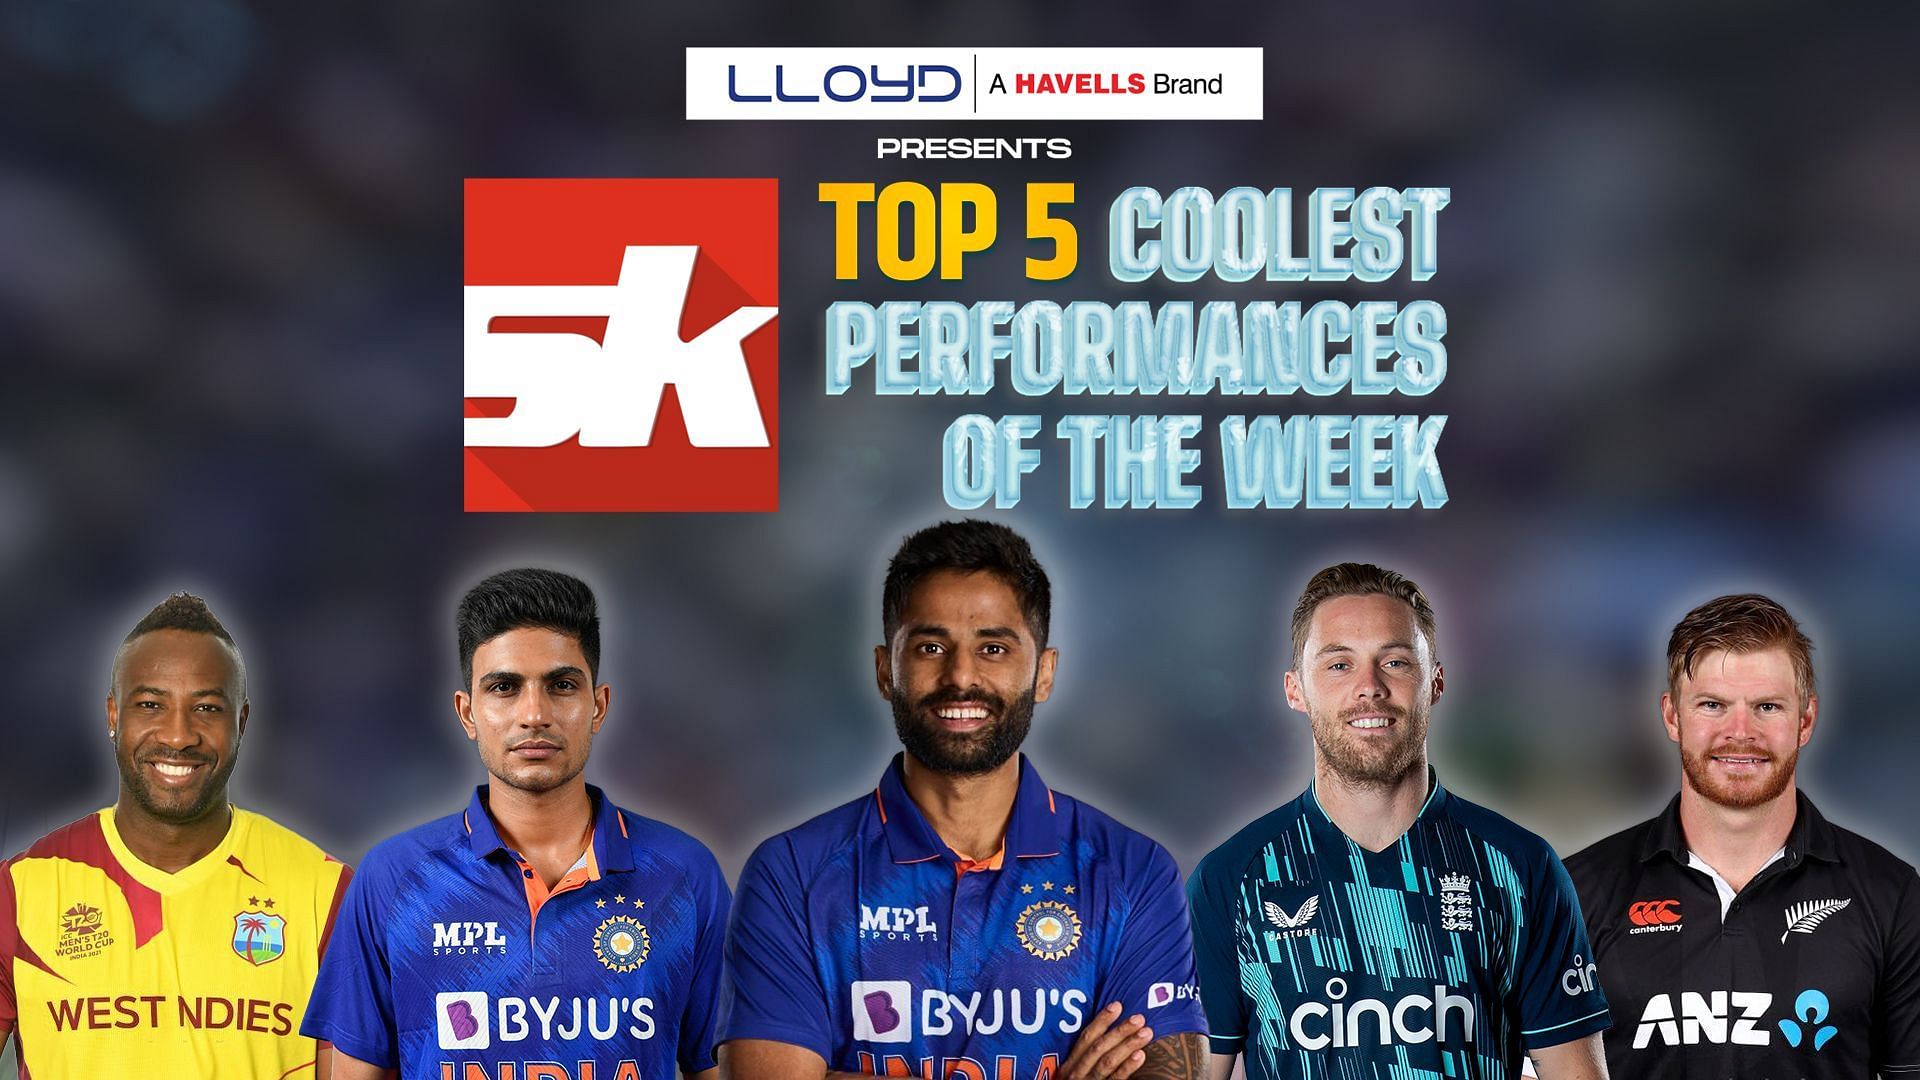 Lloyd presents Top 5 Coolest Performances of the Week